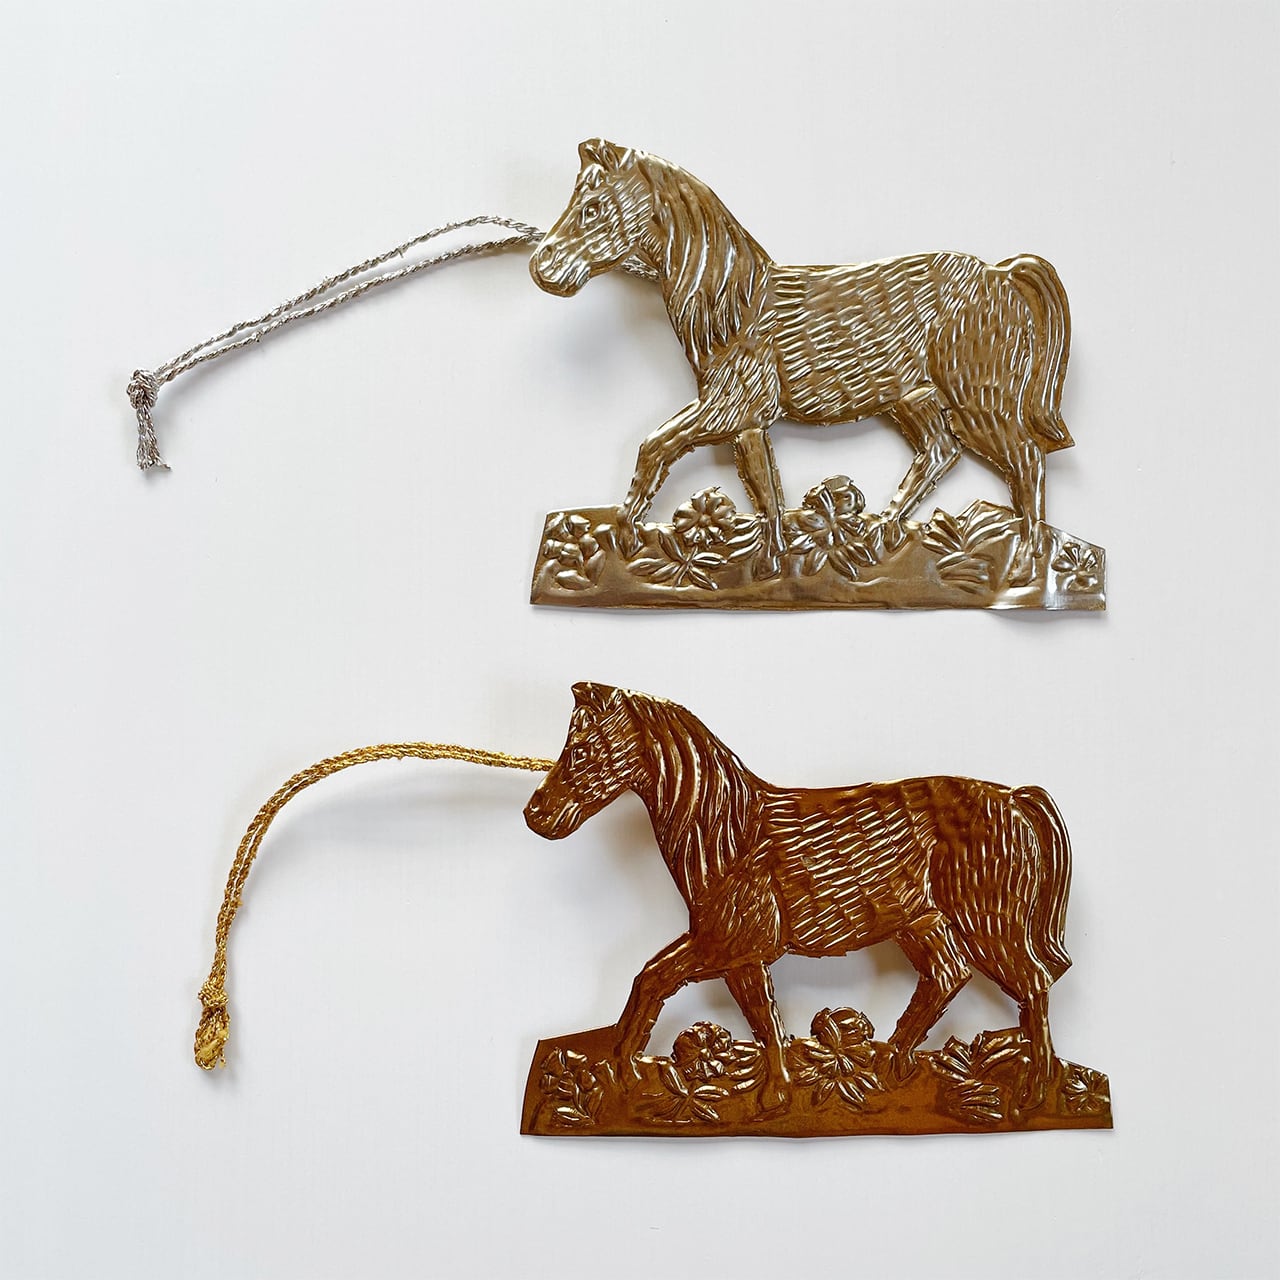 Iron ornament (bear/horse/santaclaus)